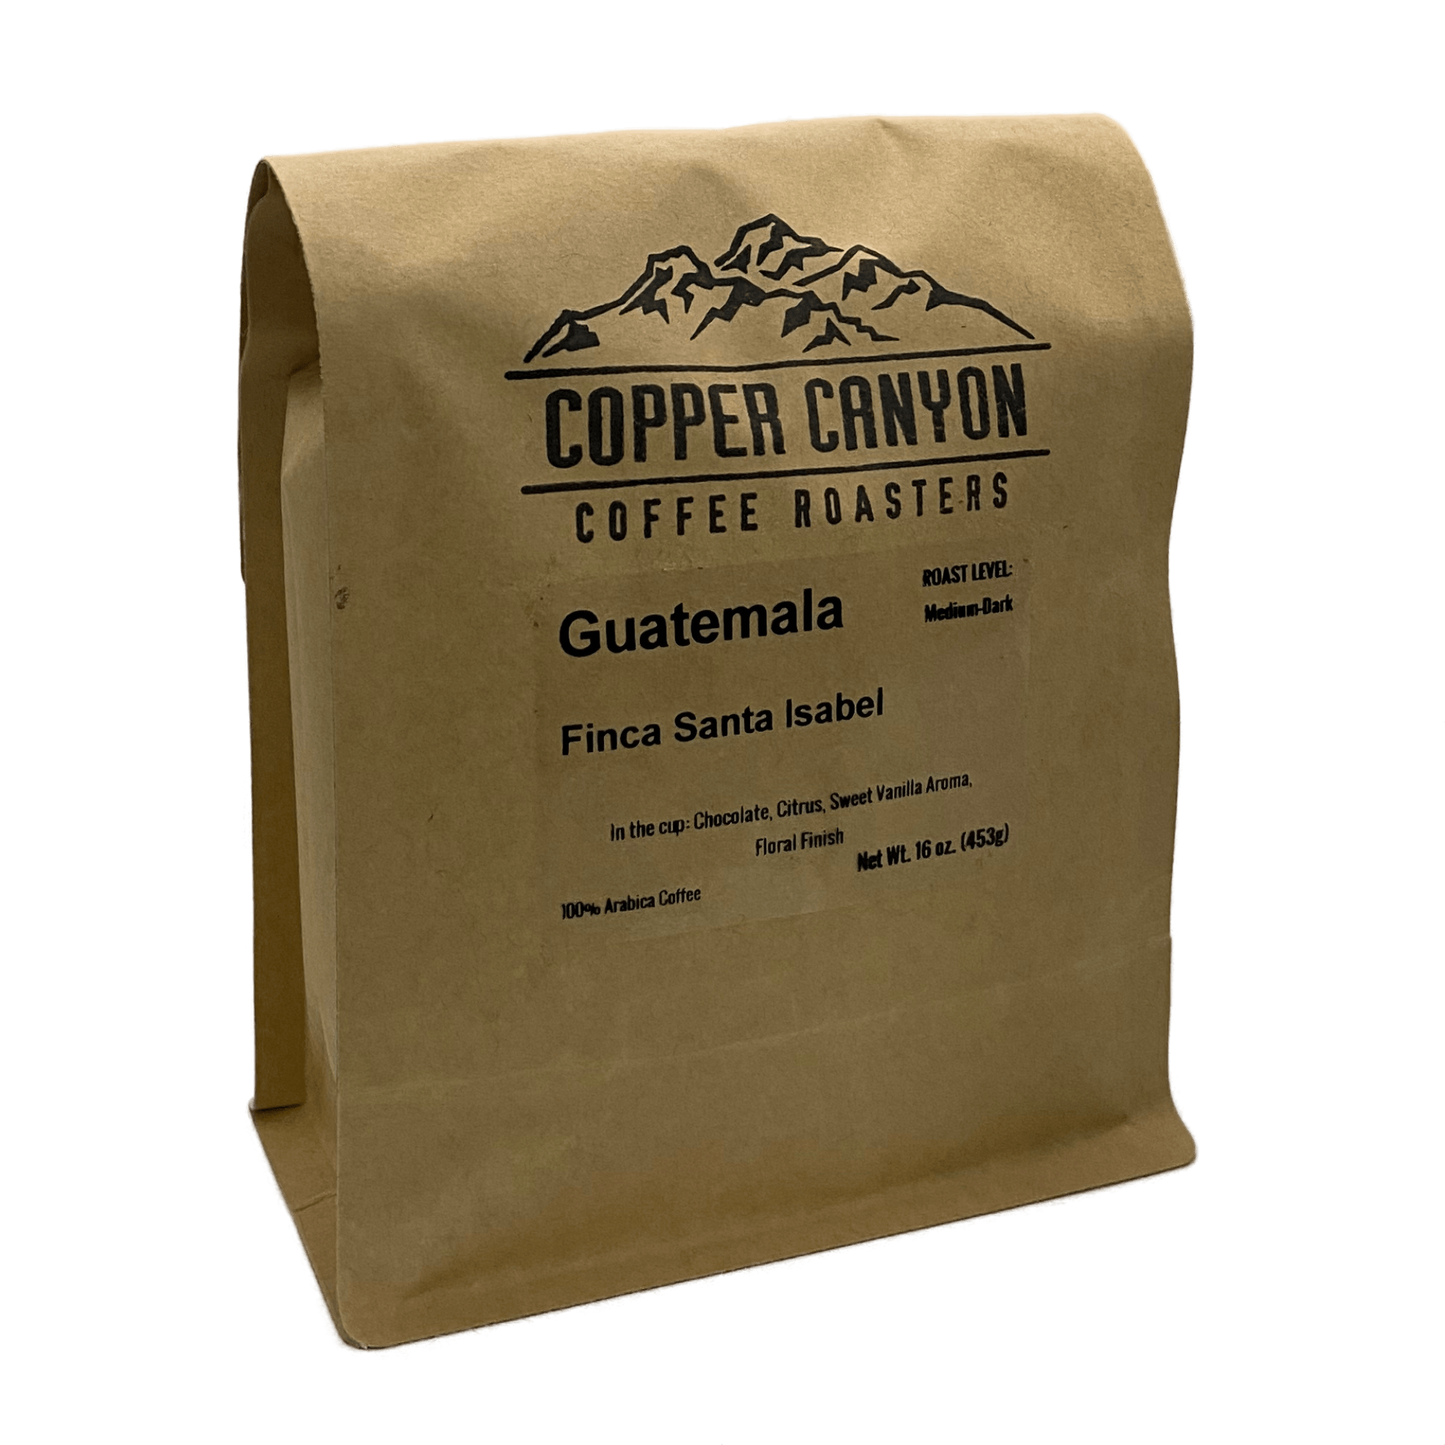 16 oz bag of Guatemala, single origin, medium roast coffee